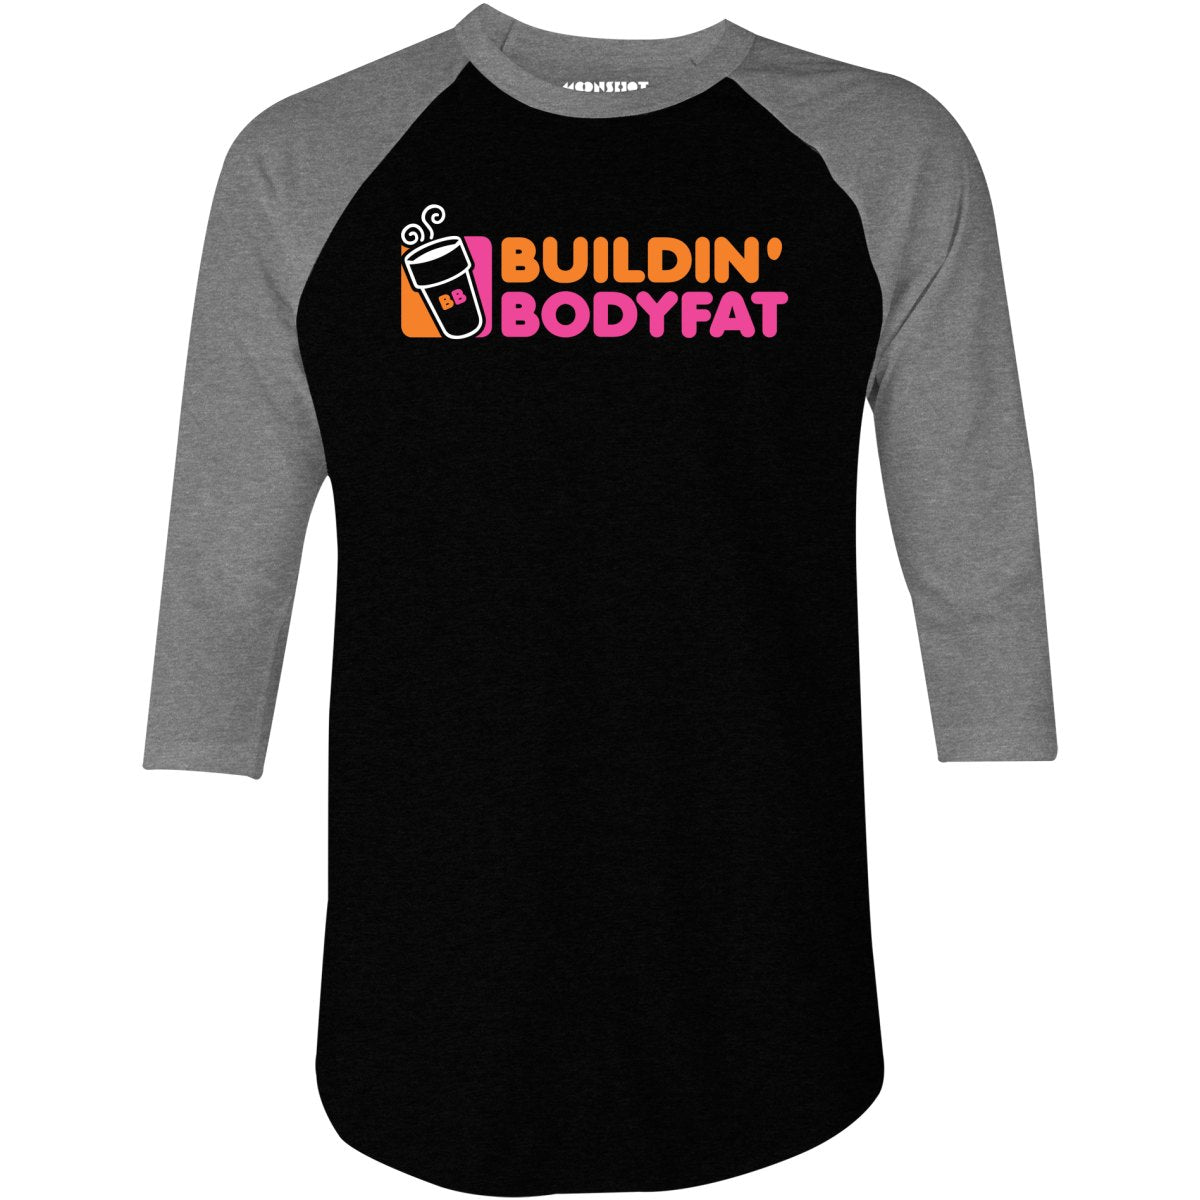 Buildin' Bodyfat - 3/4 Sleeve Raglan T-Shirt